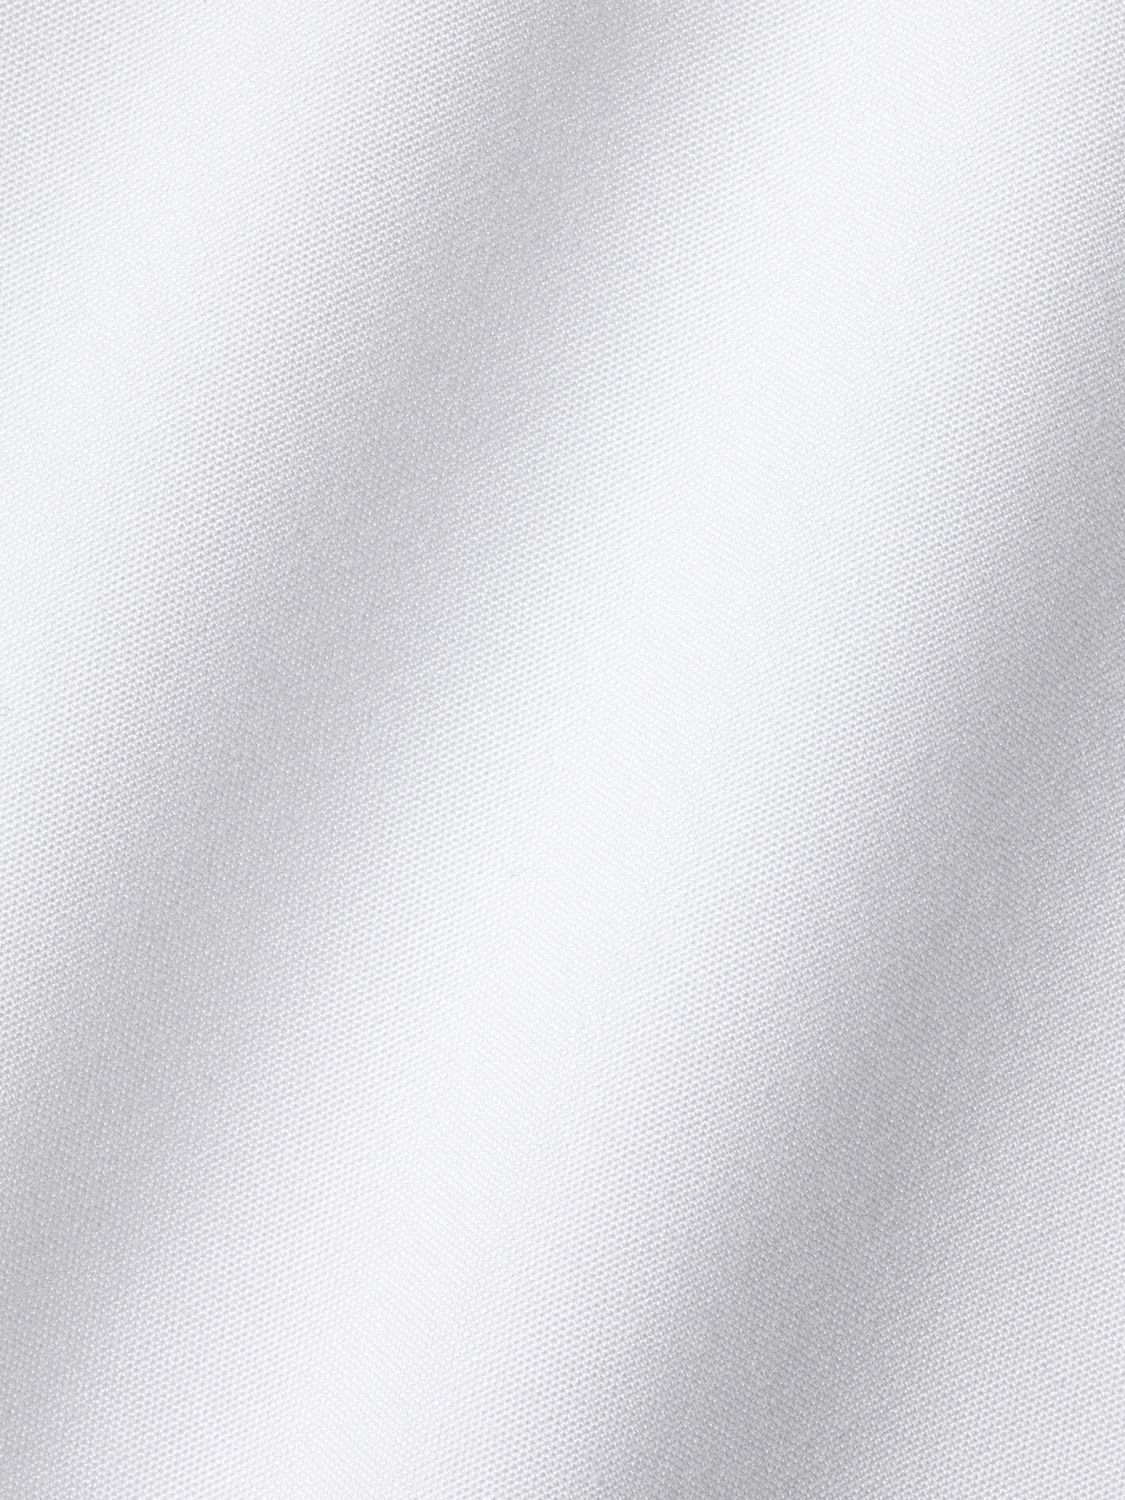 Buy Charles Tyrwhitt Non-Iron Cotton Poplin Shirt, White Online at johnlewis.com